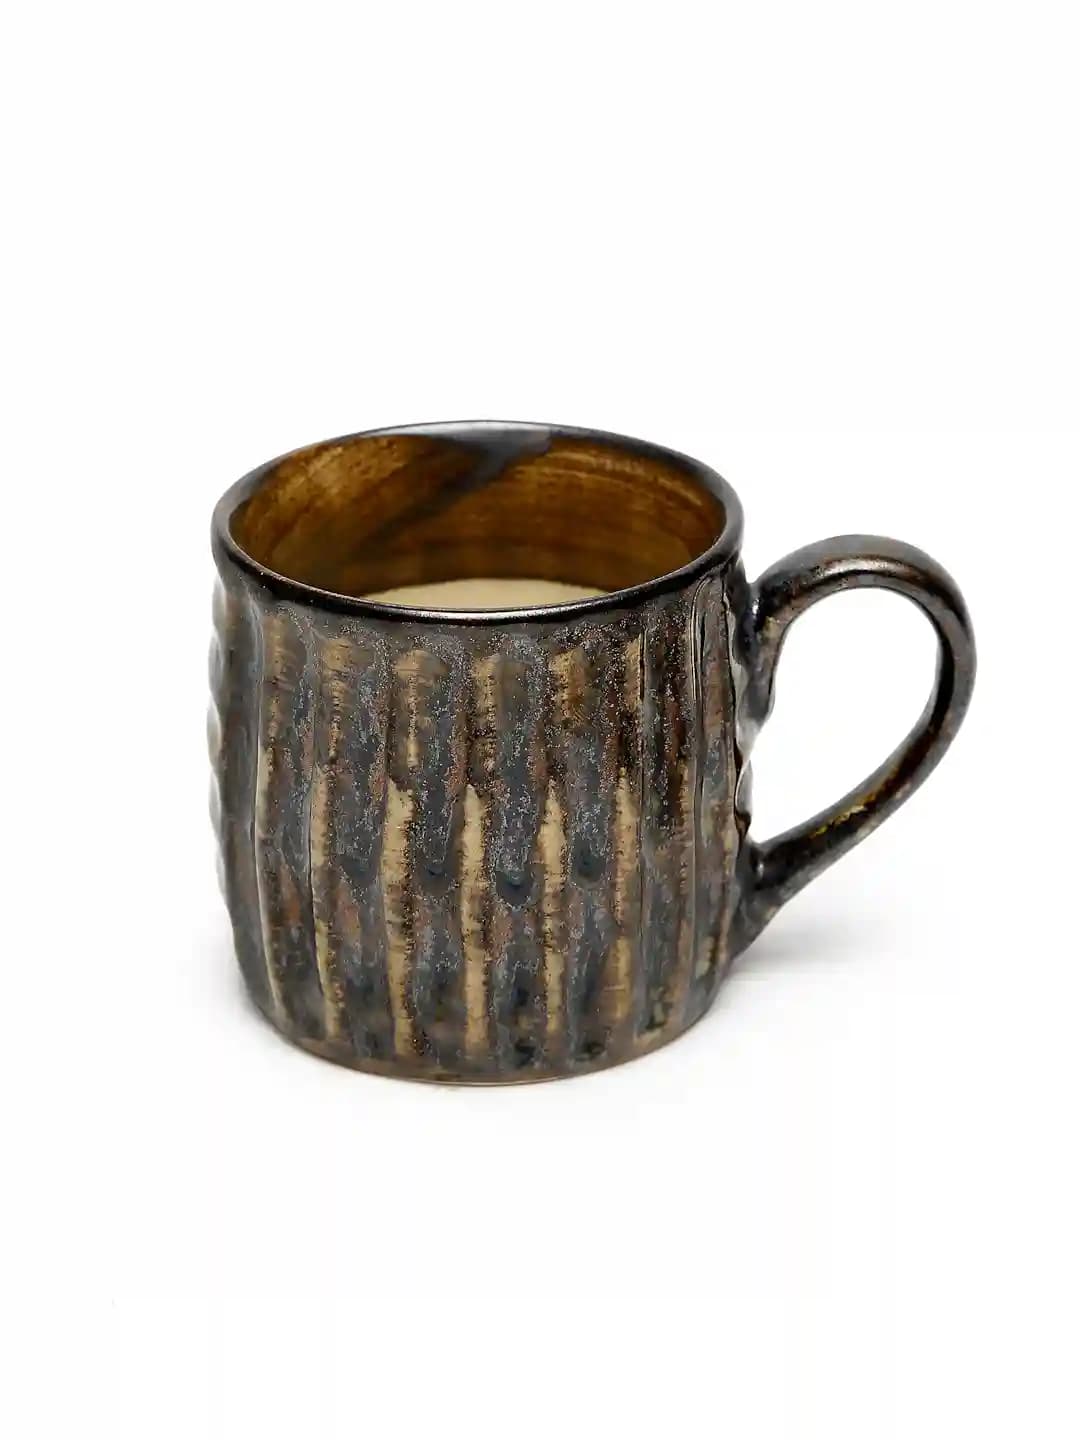 Shilpkara 'Aladin Chirag' Hand Painted Ceramic Tea Mug & Kettle Tea Set